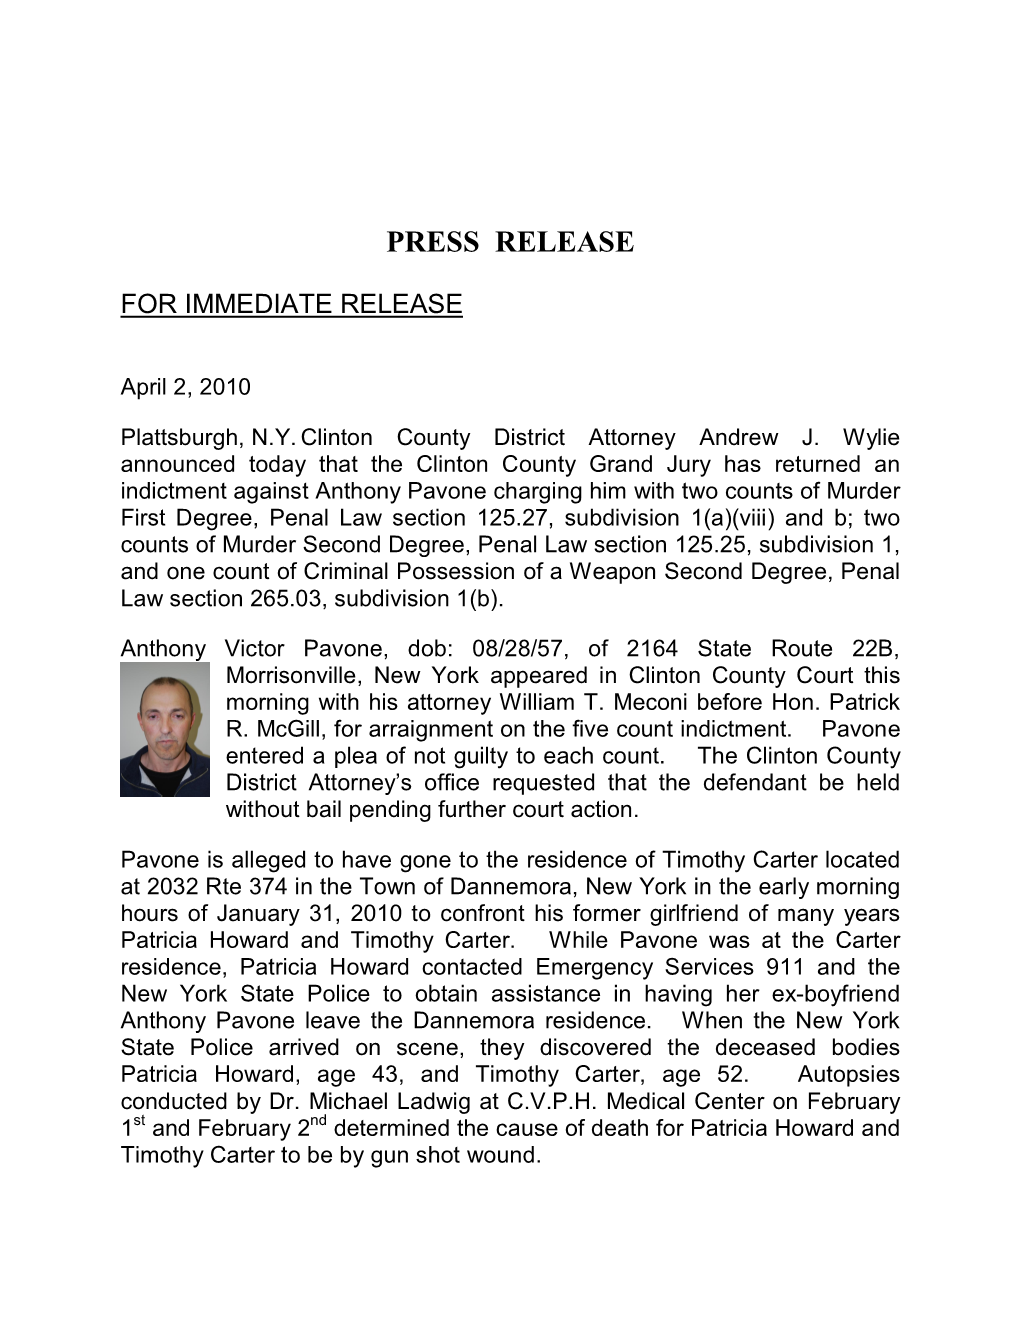 Anthony Pavone Press Release